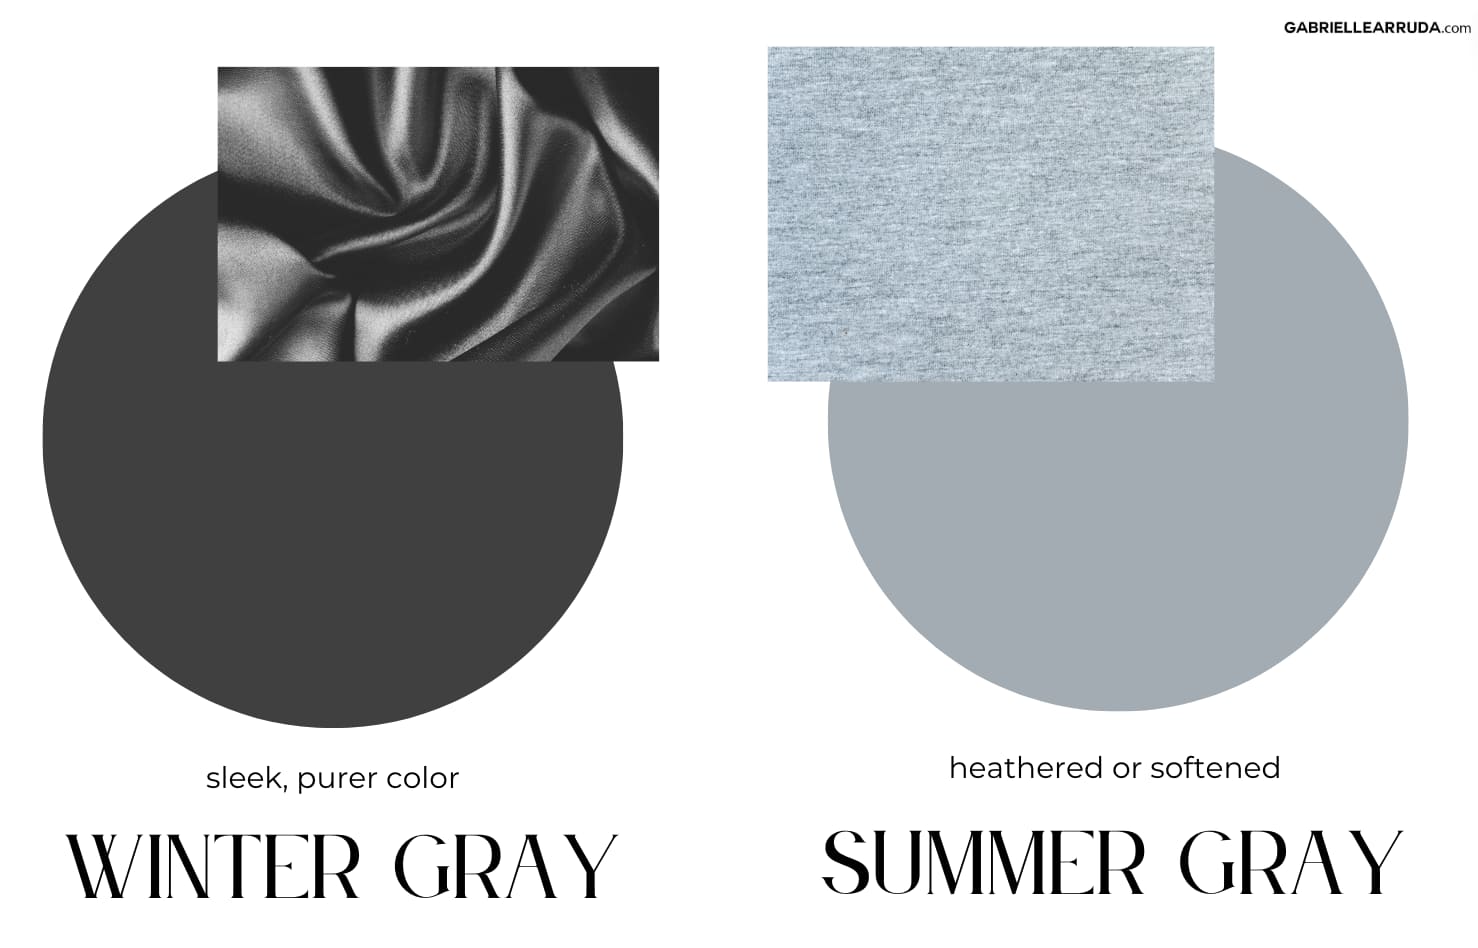 winter gray versus summer gray